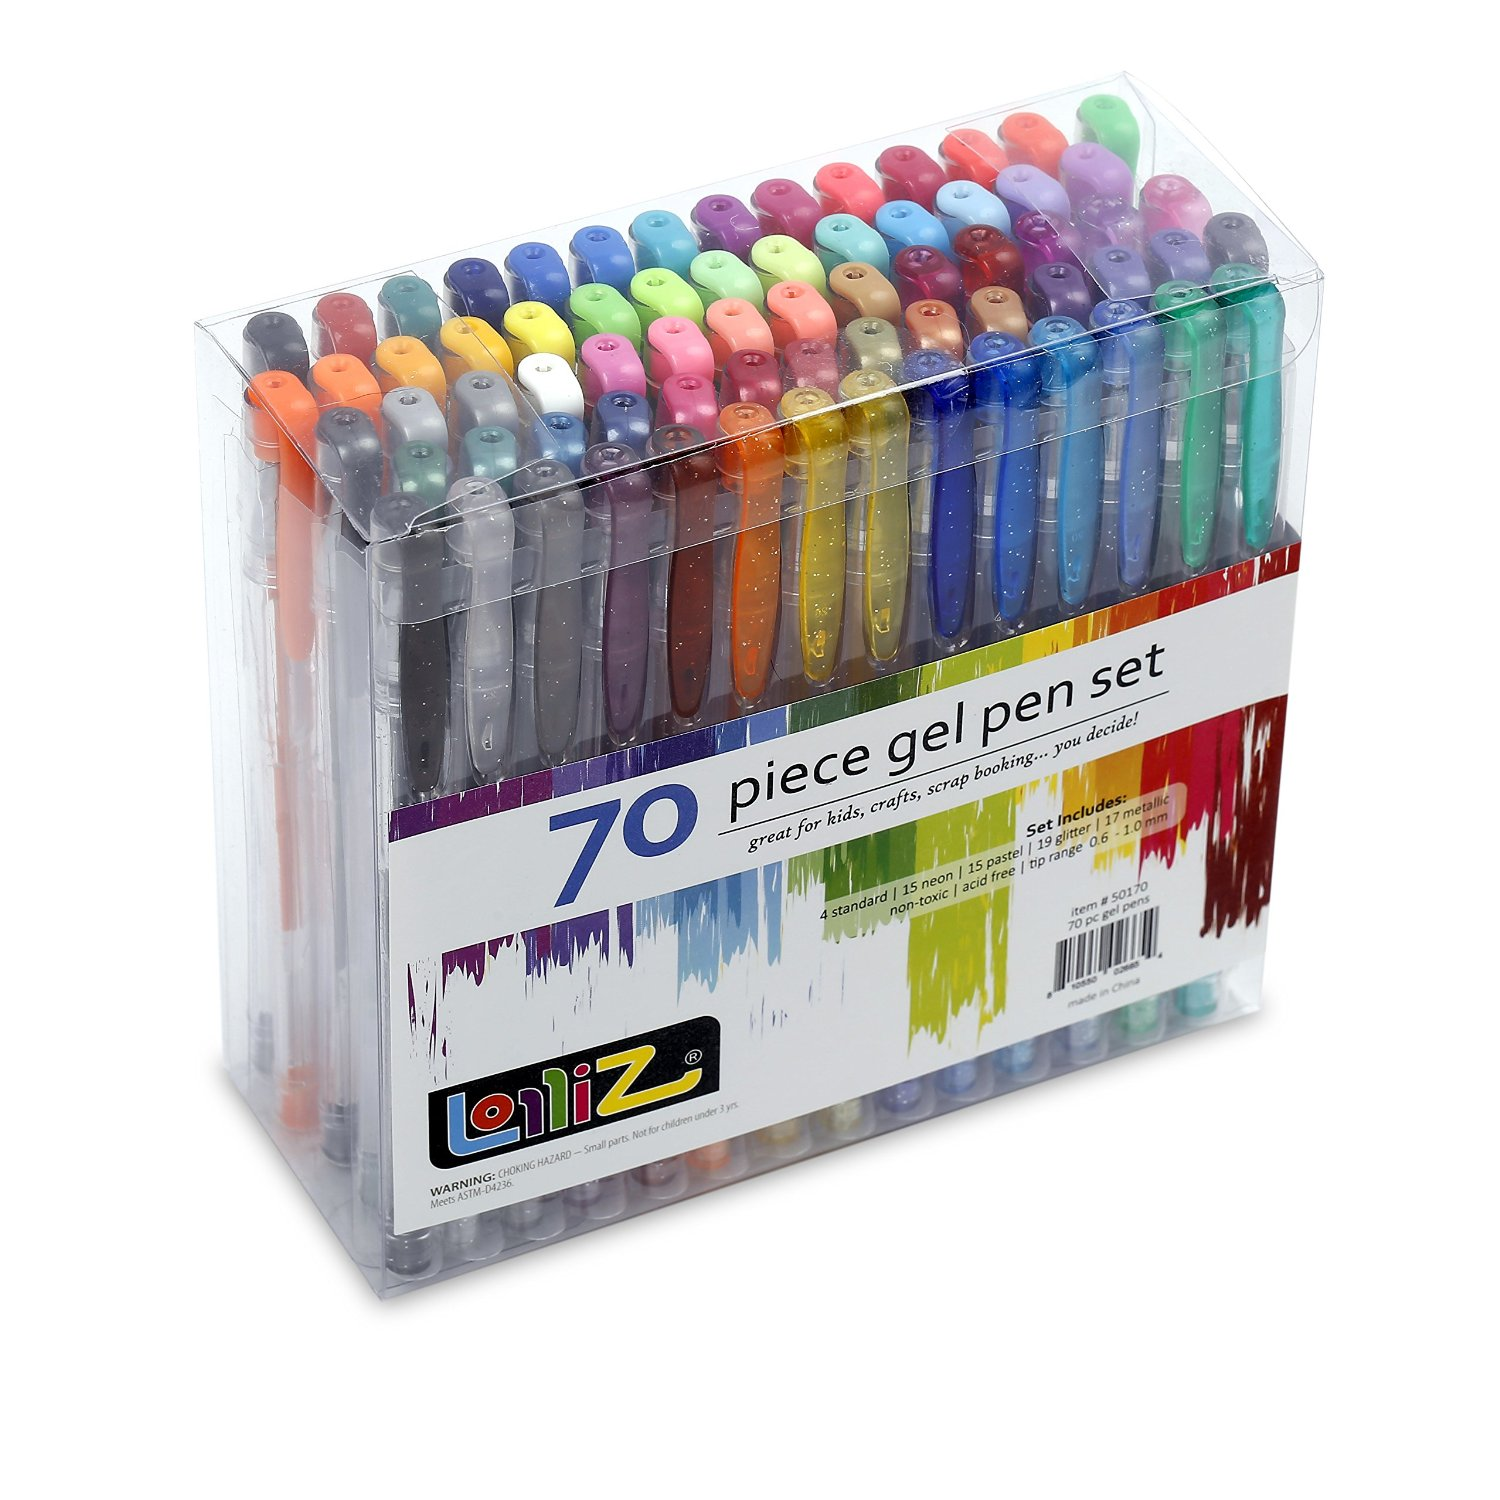 RUN! LolliZ 70 Gel Pens Tray Set Only $10.99 on Amazon!